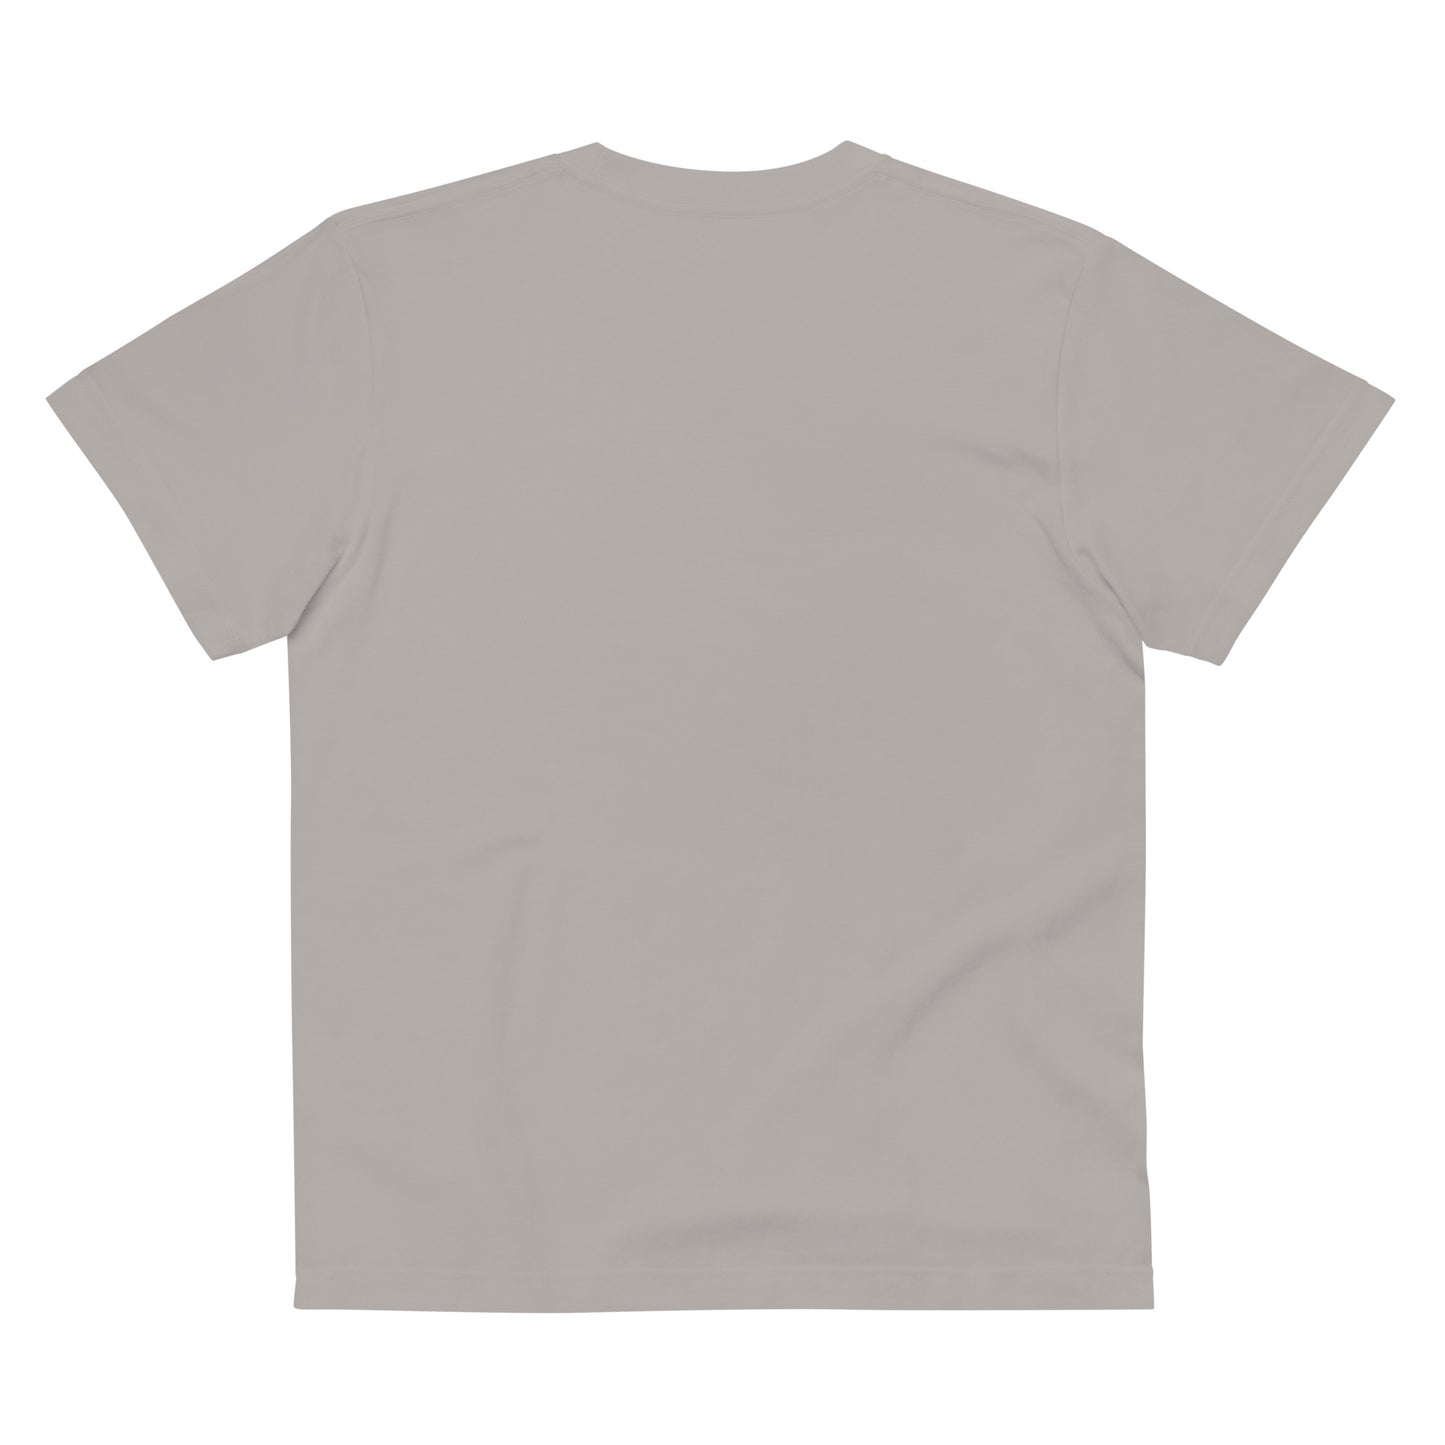 E037 - T-shirt/Regular fit (MX win : Gray/Charcoal)